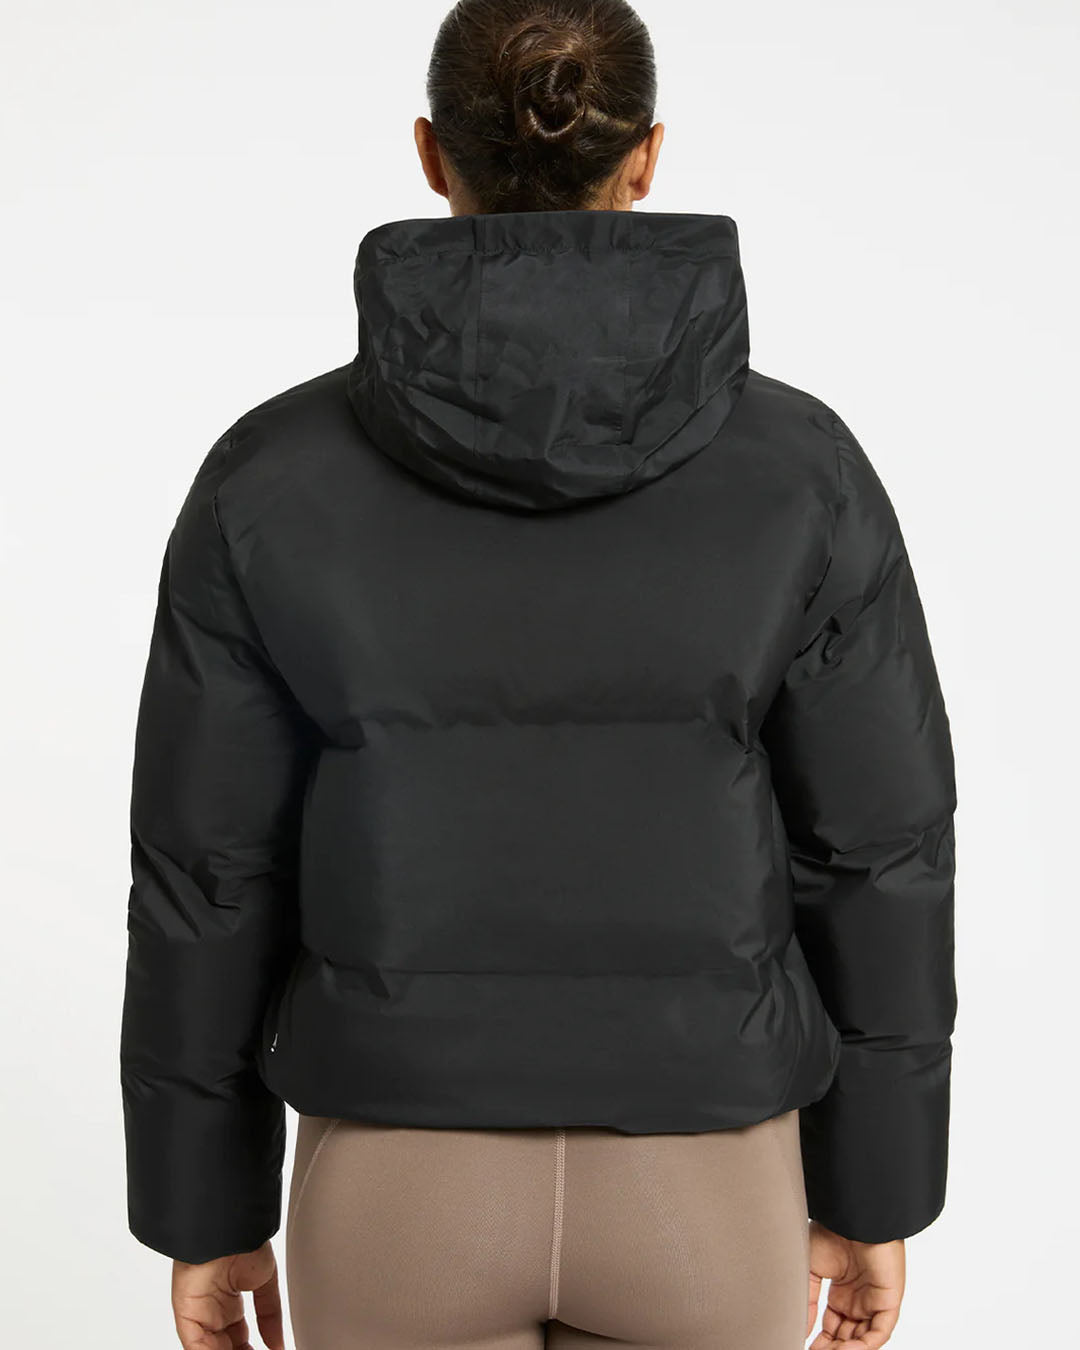 Downpour Puffer - Black Jackets by Nimble - Prae Store